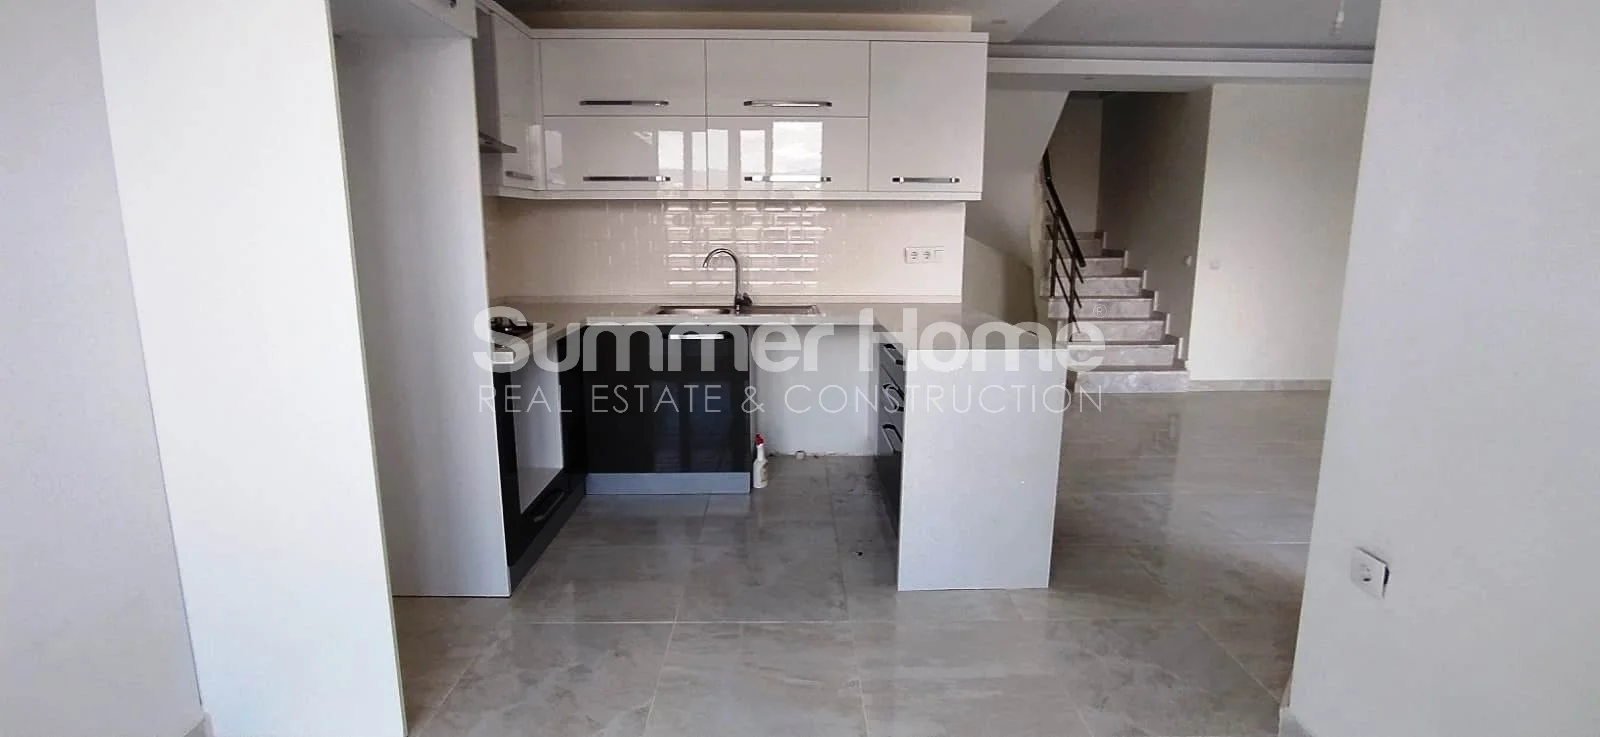 Two-bedroom duplex apartment offering sea view in Gulluk, Bodrum Interior - 6